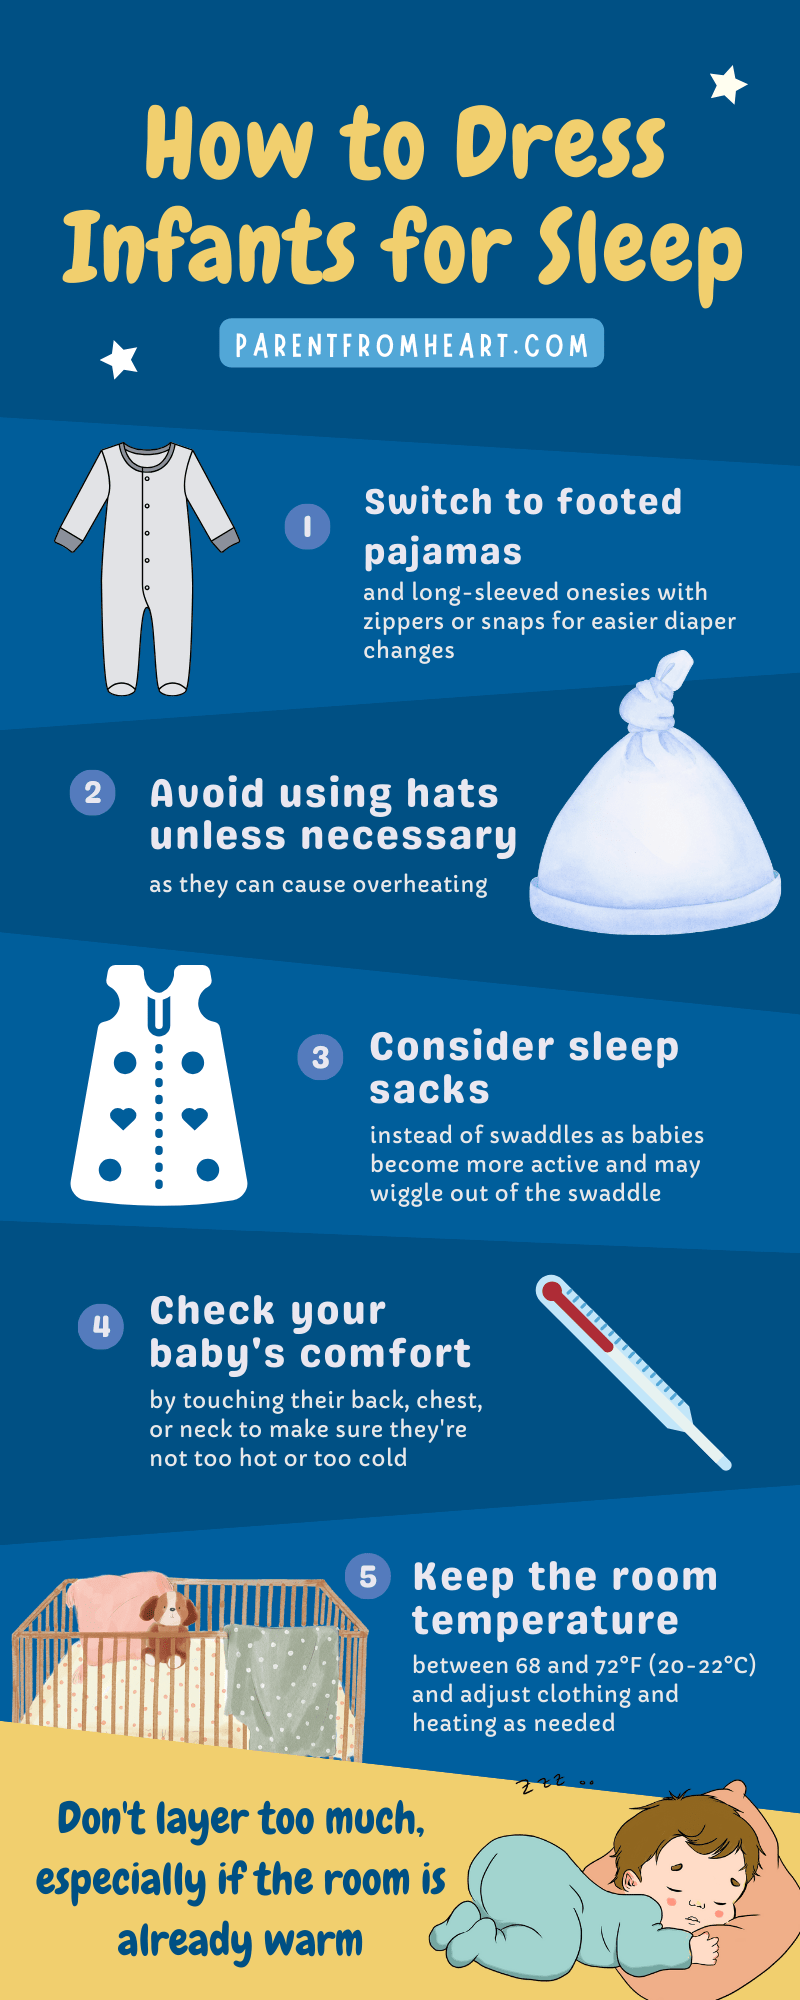 Infographics on how to dress infants for sleep.